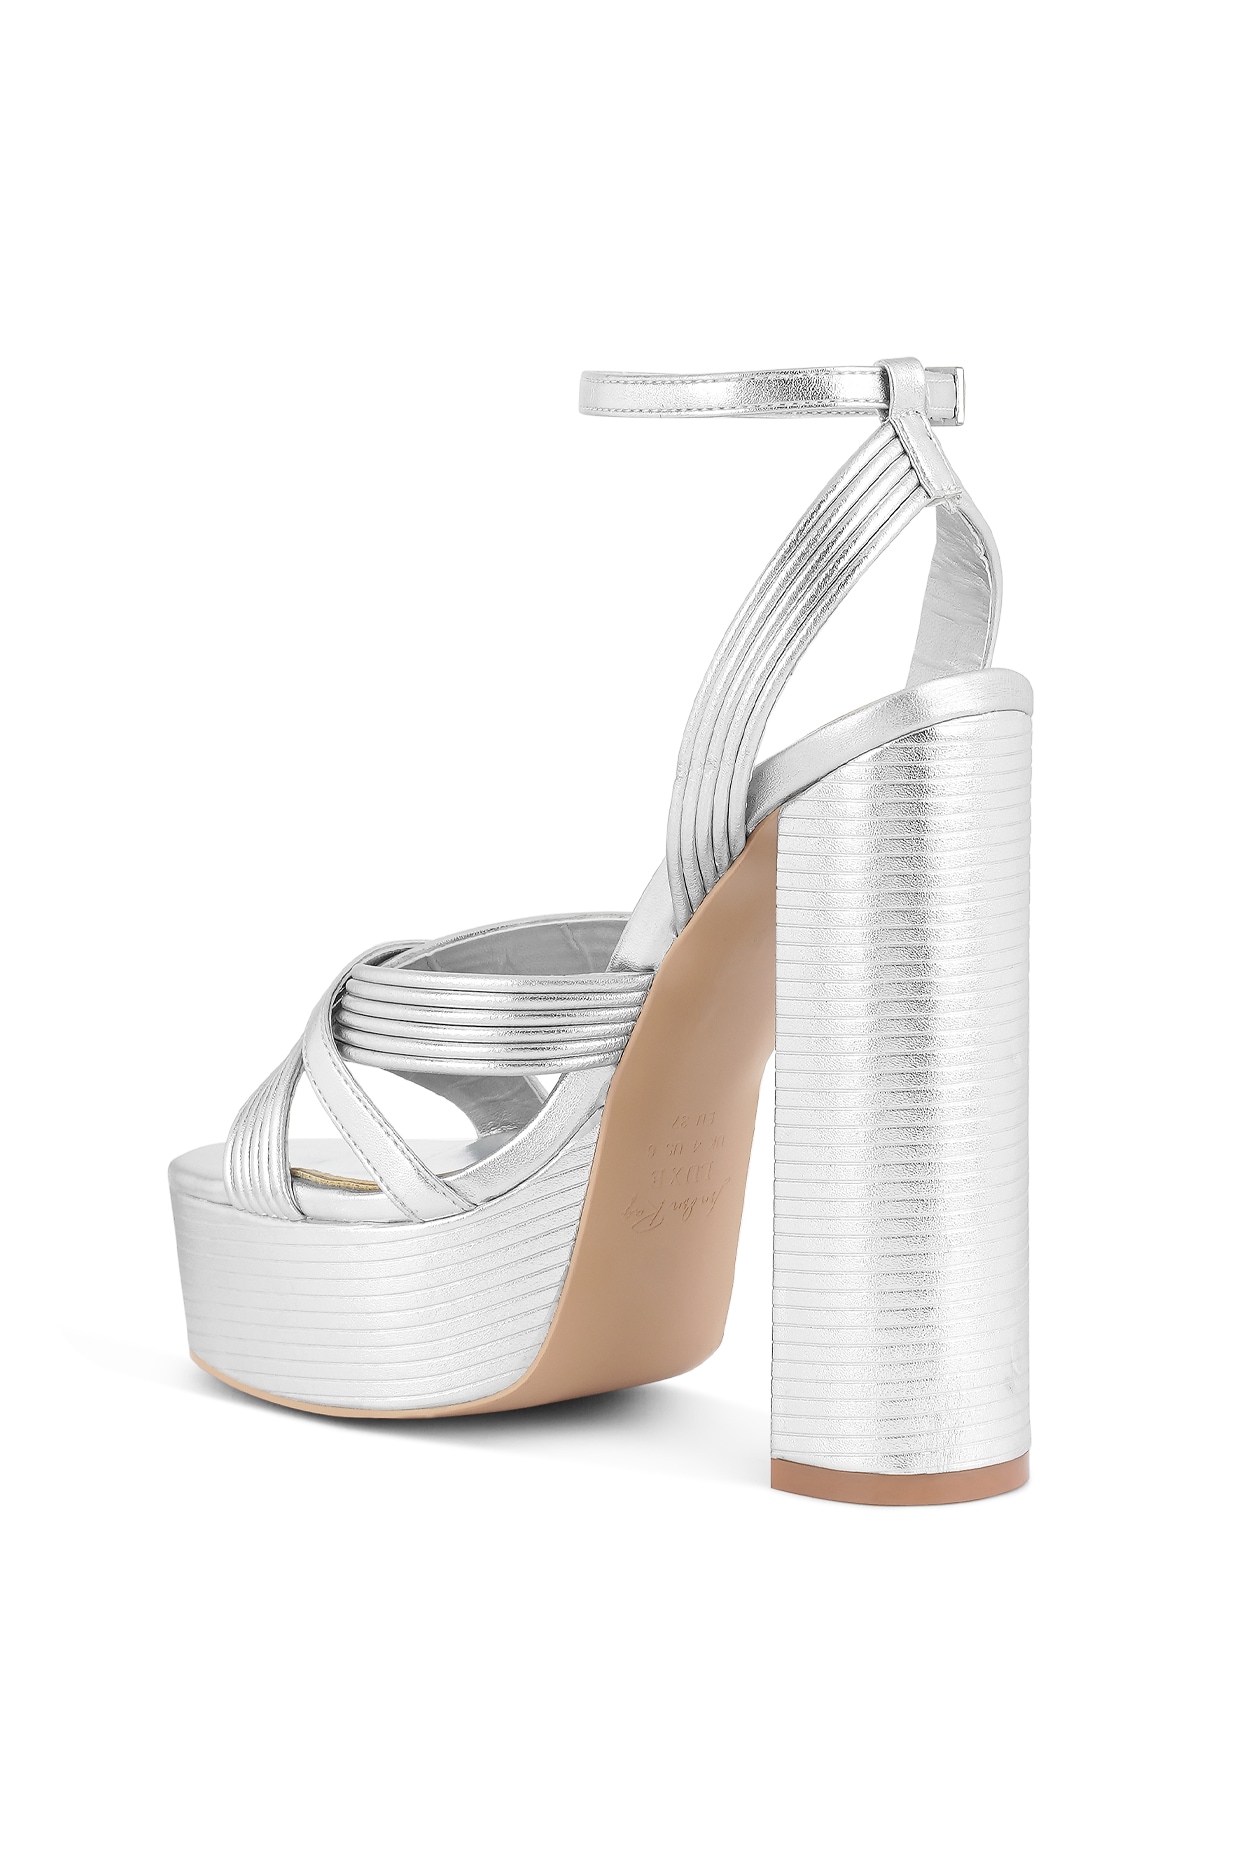 ASOS DESIGN Nate platform heeled sandals in silver | ASOS